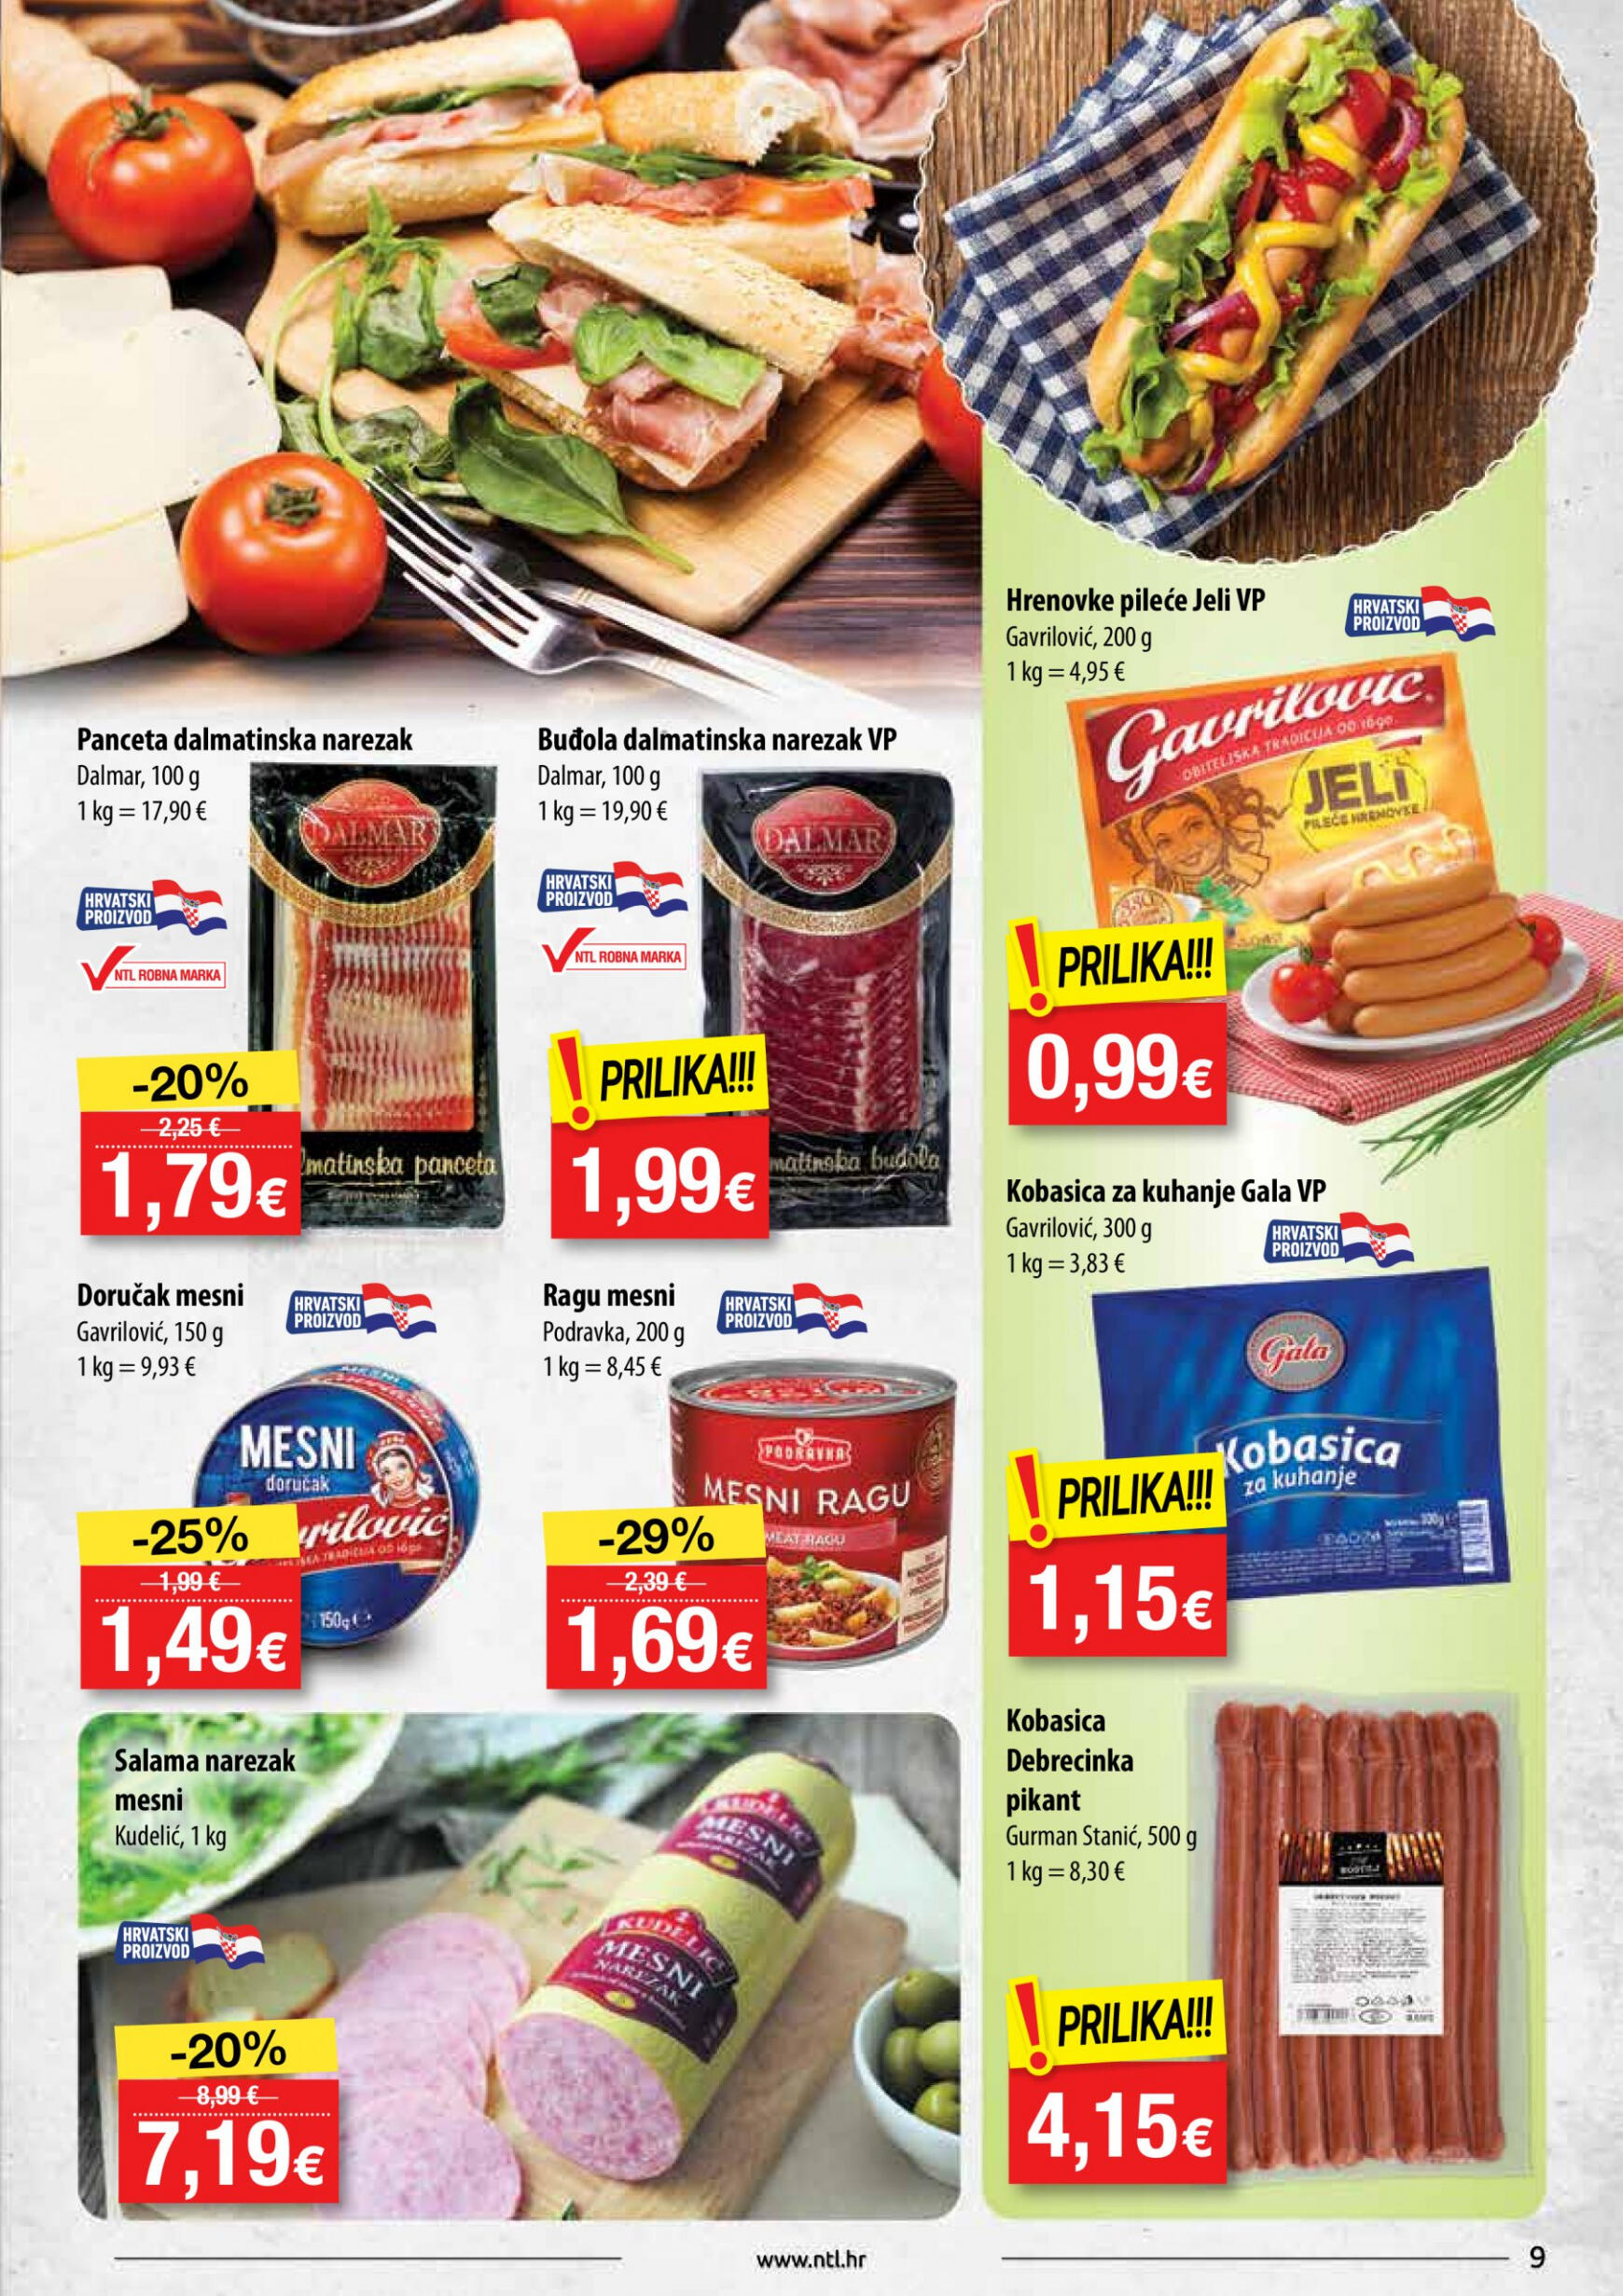 ntl - Novi katalog NTL - Supermarketi Soblinec, Krapina, Duga Resa 10.04. - 16.04. - page: 9